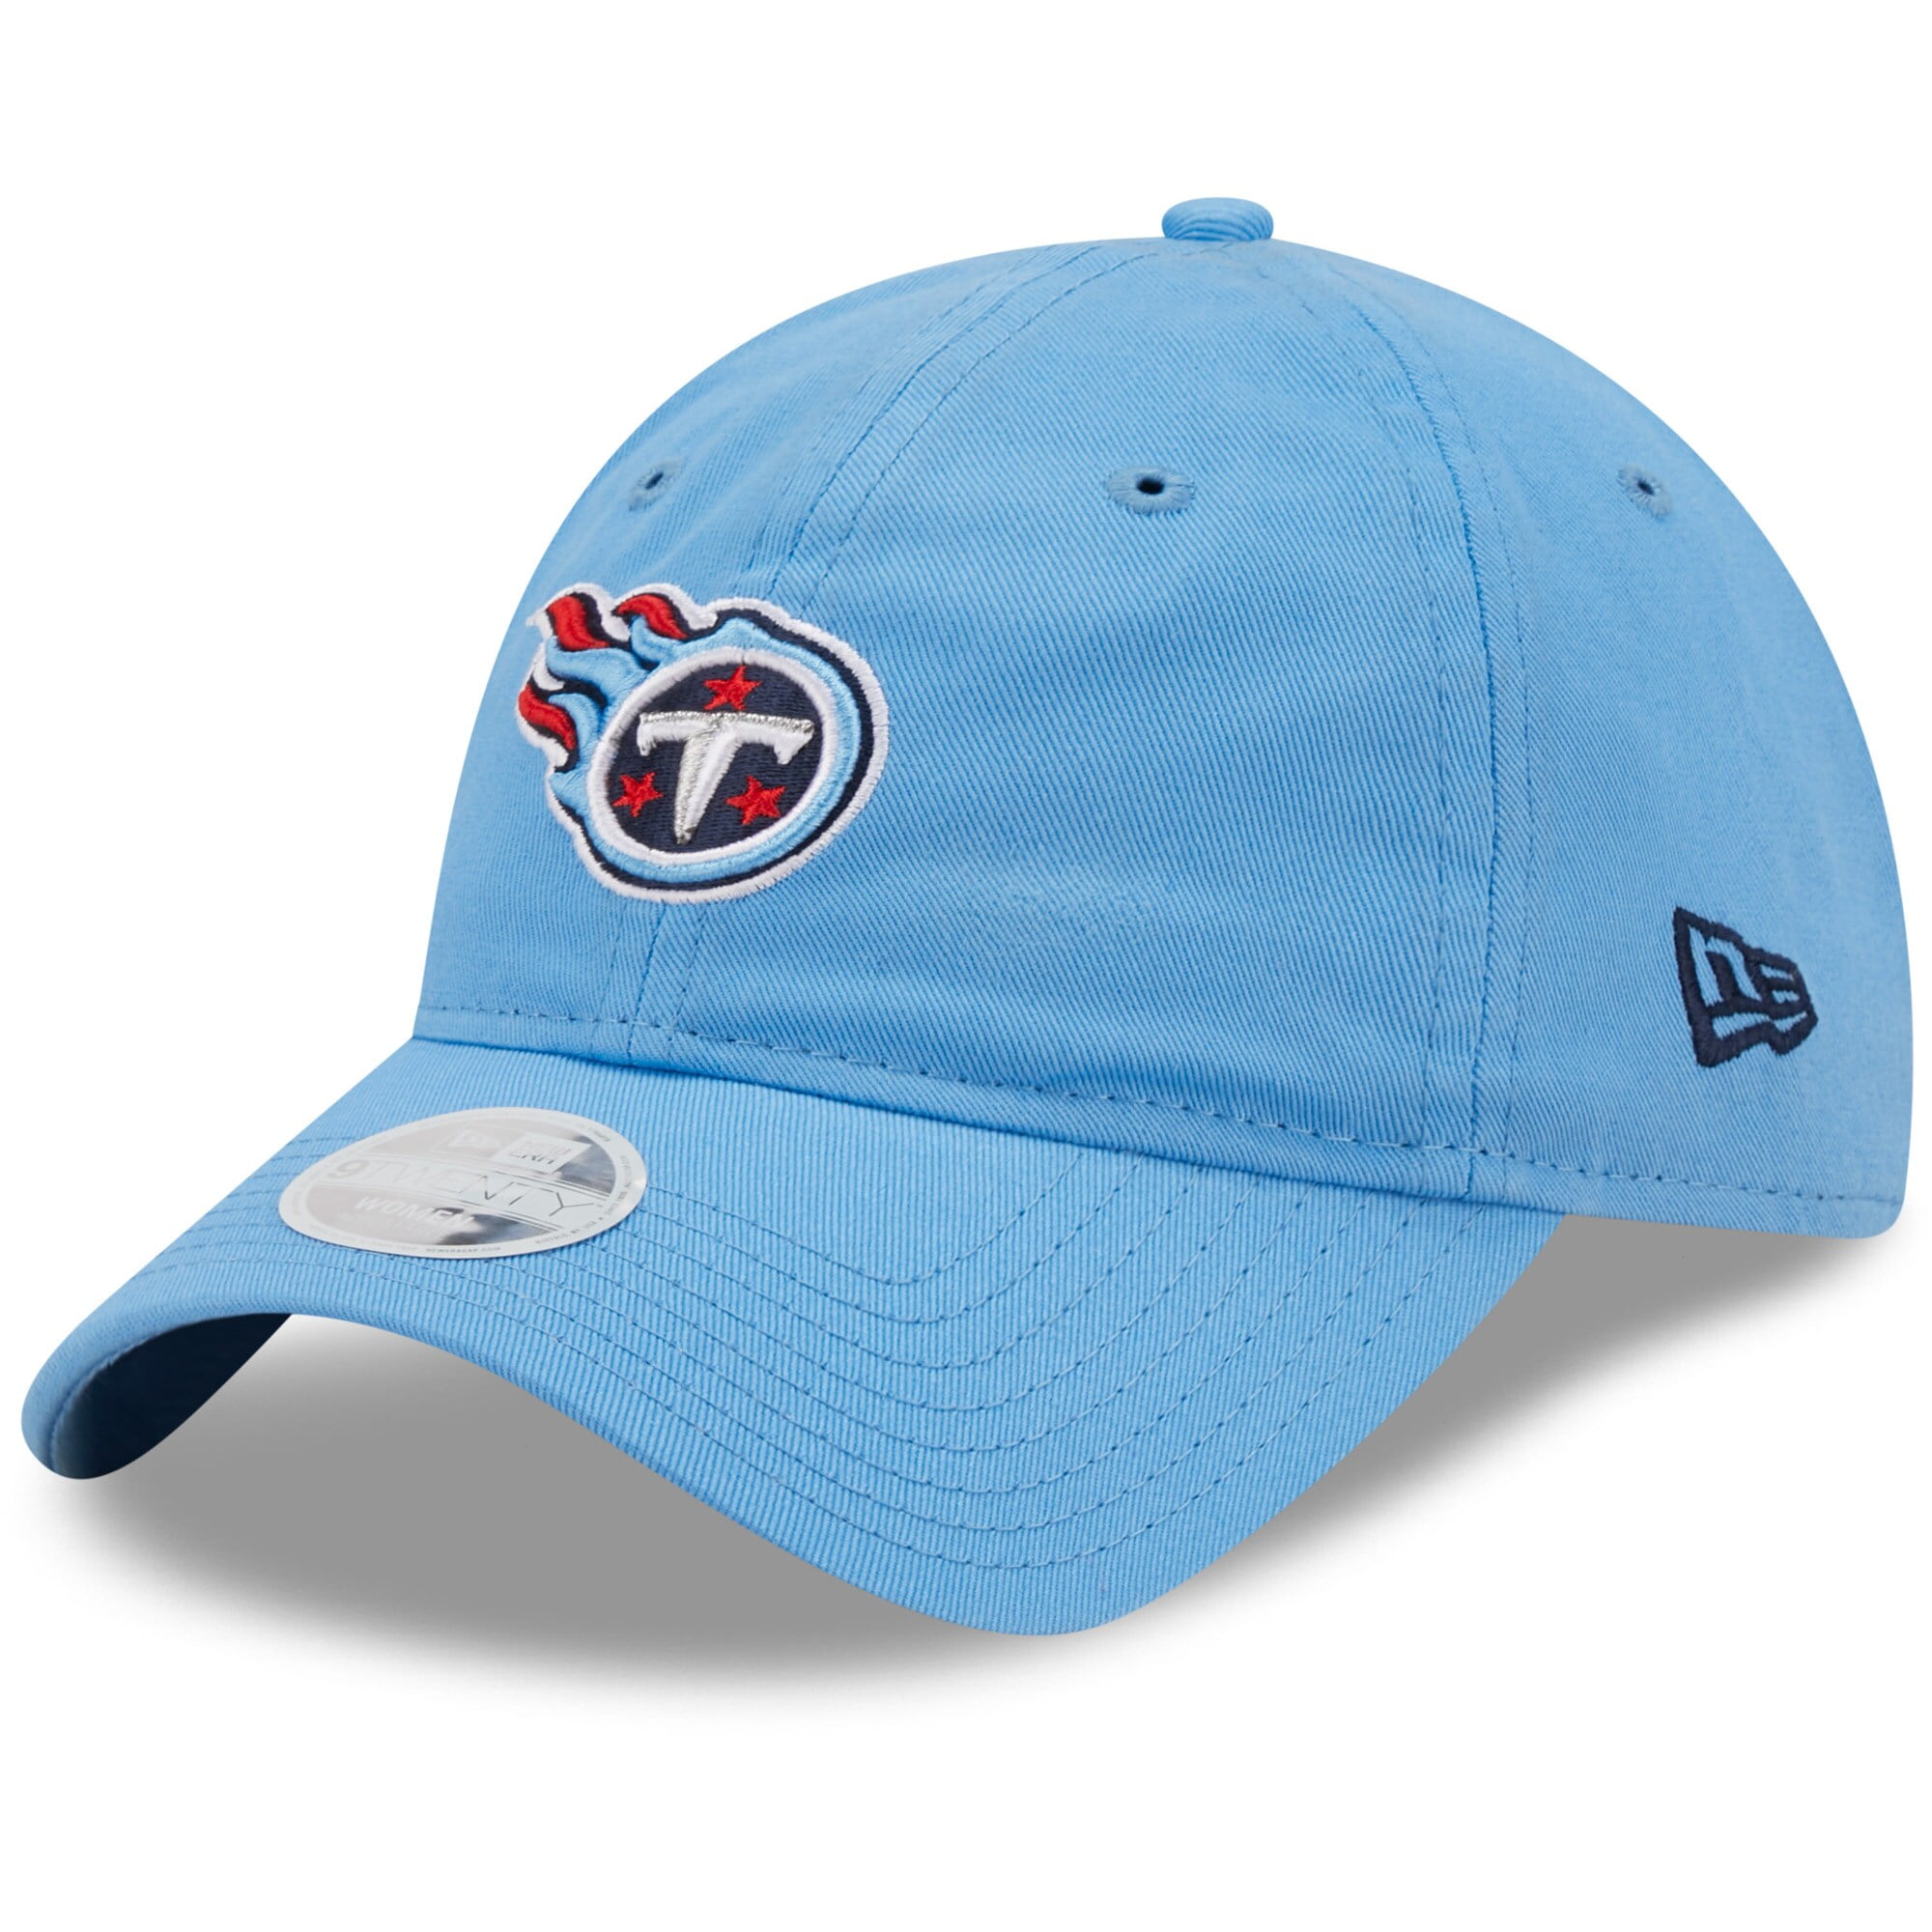 Tennessee Titans Hats - Walmart.com